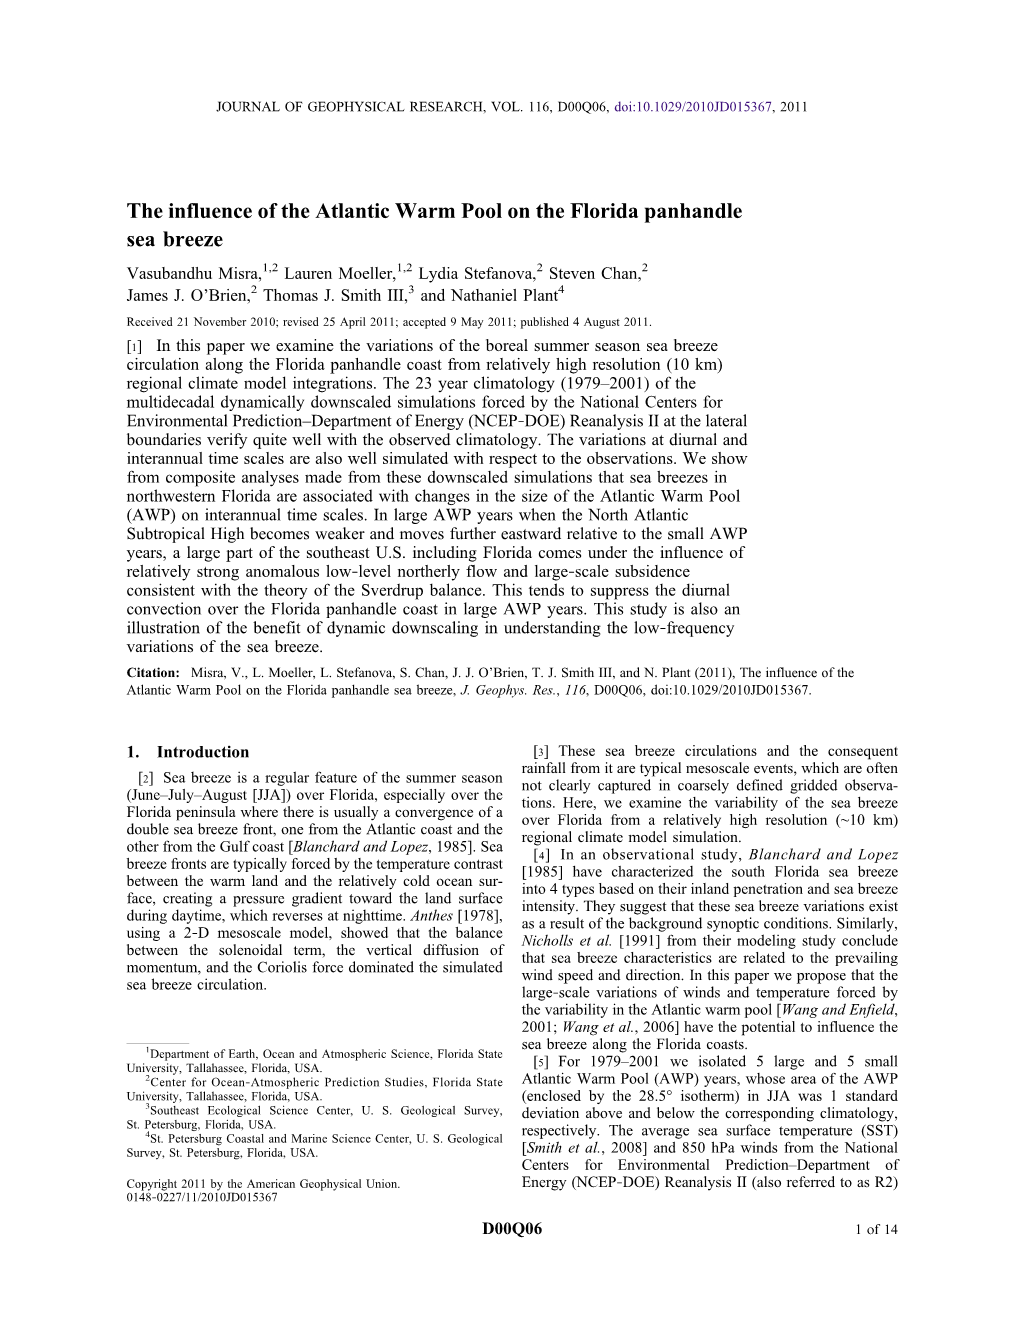 The Influence of the Atlantic Warm Pool on the Florida Panhandle Sea Breeze Vasubandhu Misra,1,2 Lauren Moeller,1,2 Lydia Stefanova,2 Steven Chan,2 James J